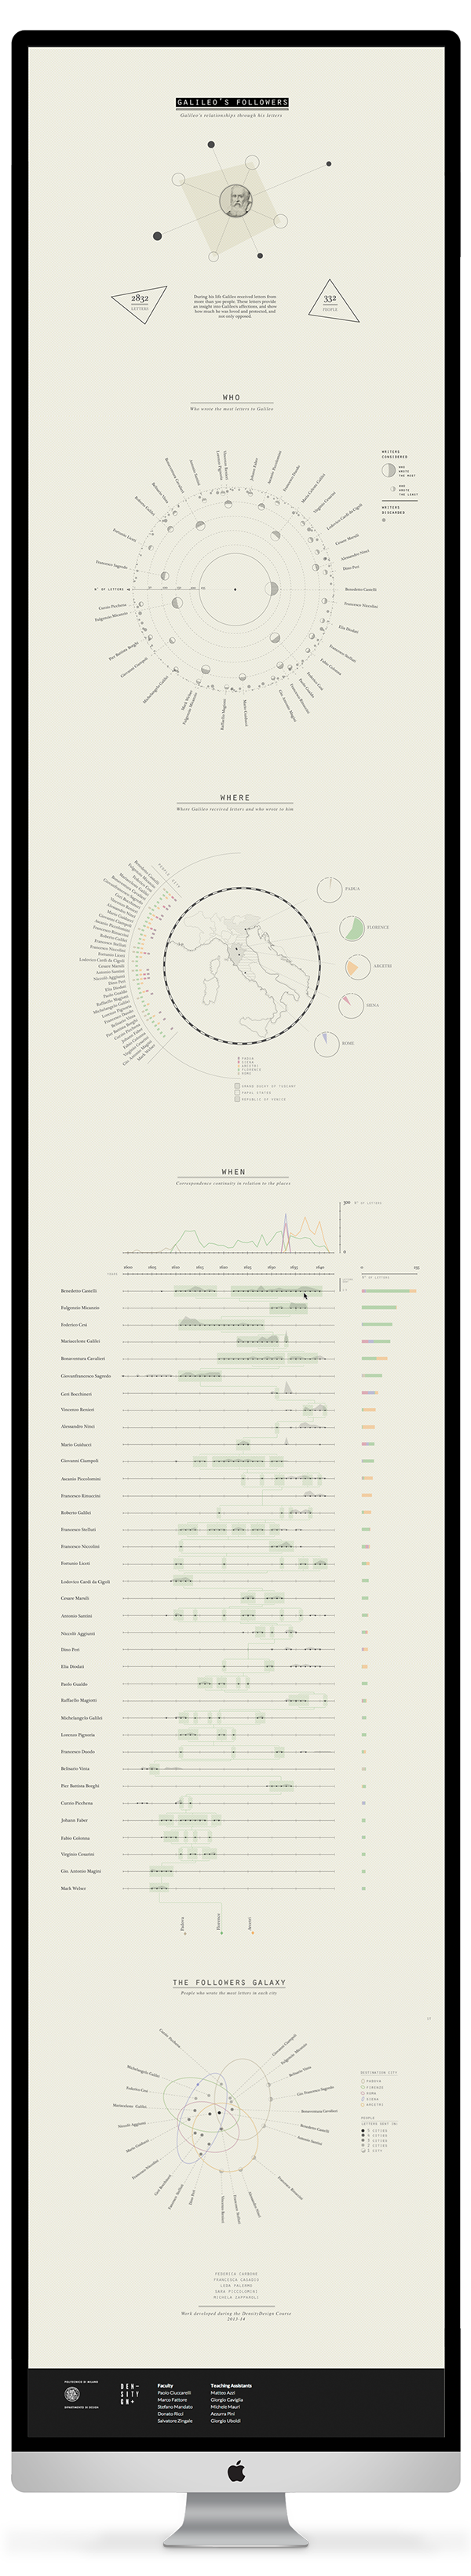 galileo letters data visualization infographic densitydesign dataviz